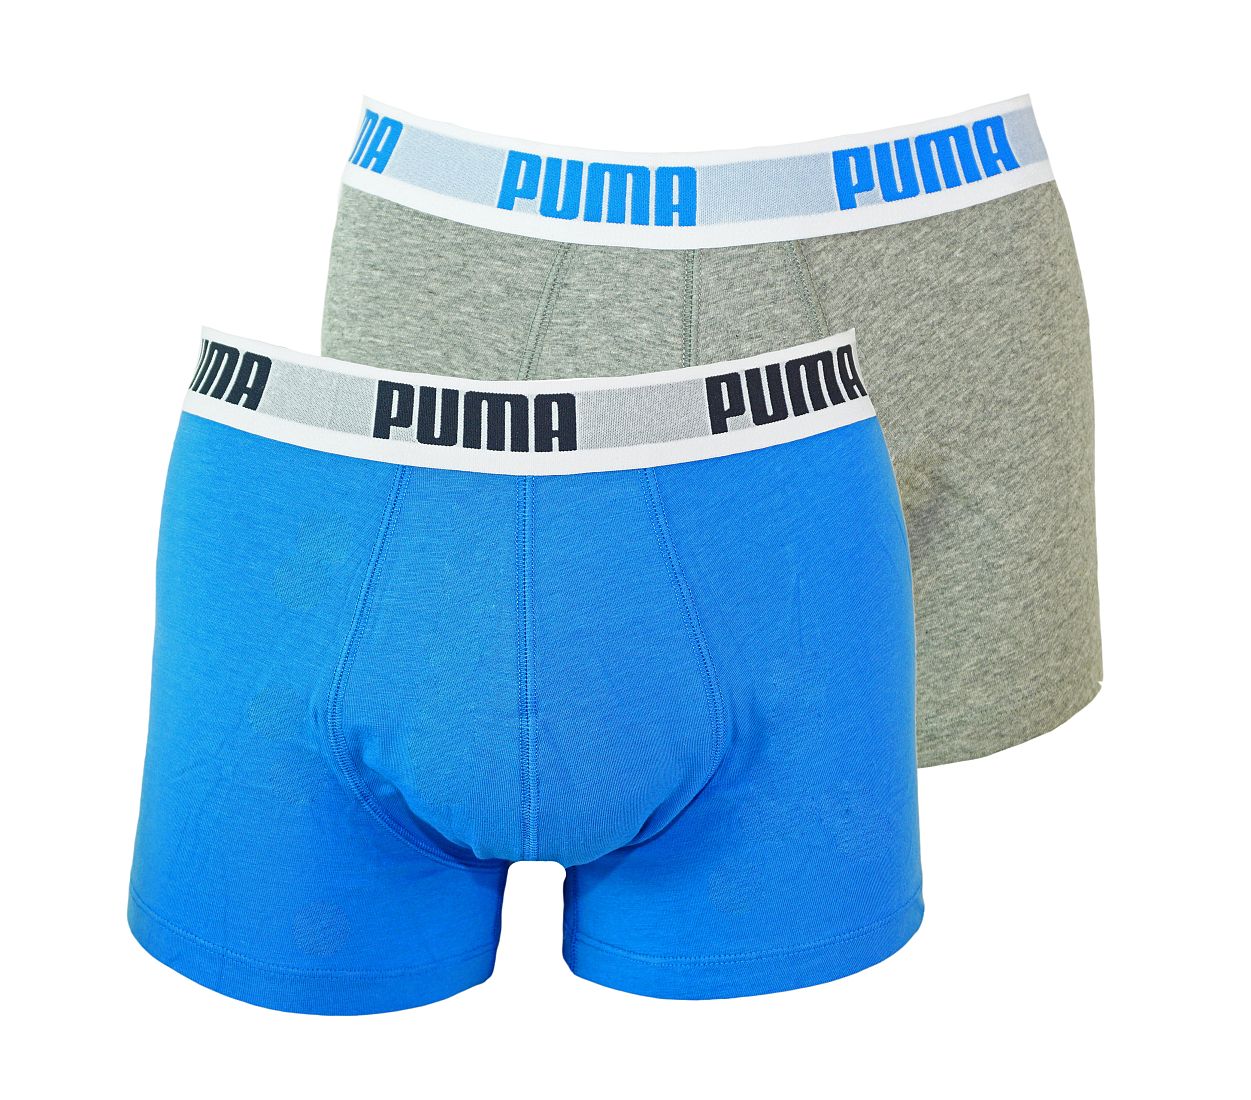 PUMA Shorts Unterhosen 2er Pack Trunk 521025001 417 020 blue, grey SF17-PMS1